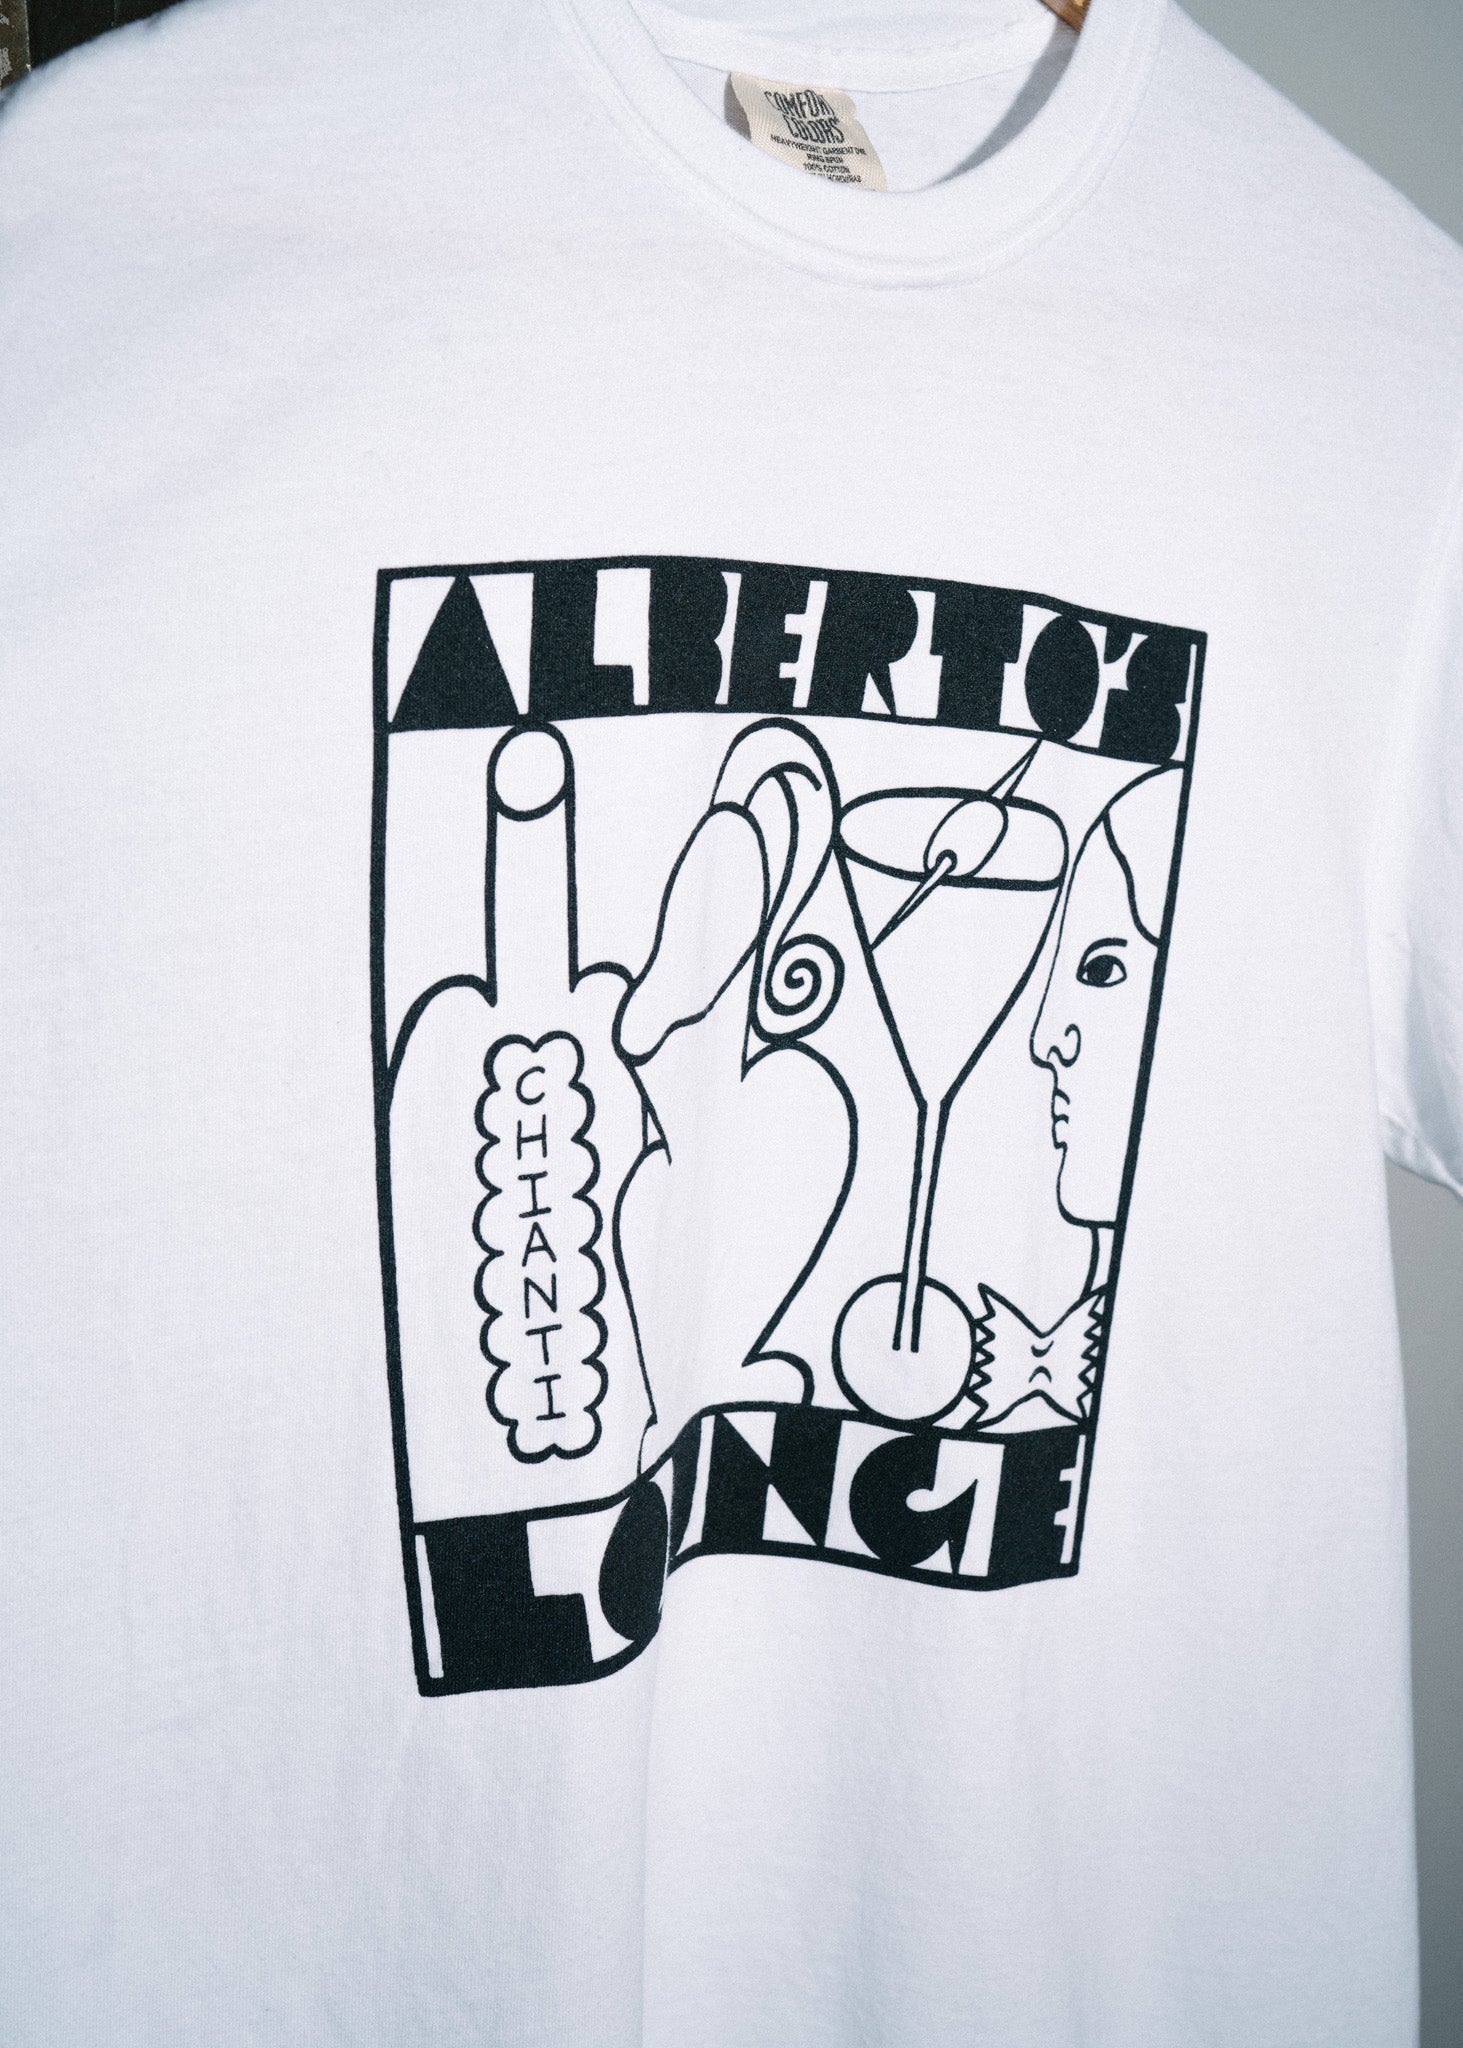 Alberto's Lounge T-Shirt